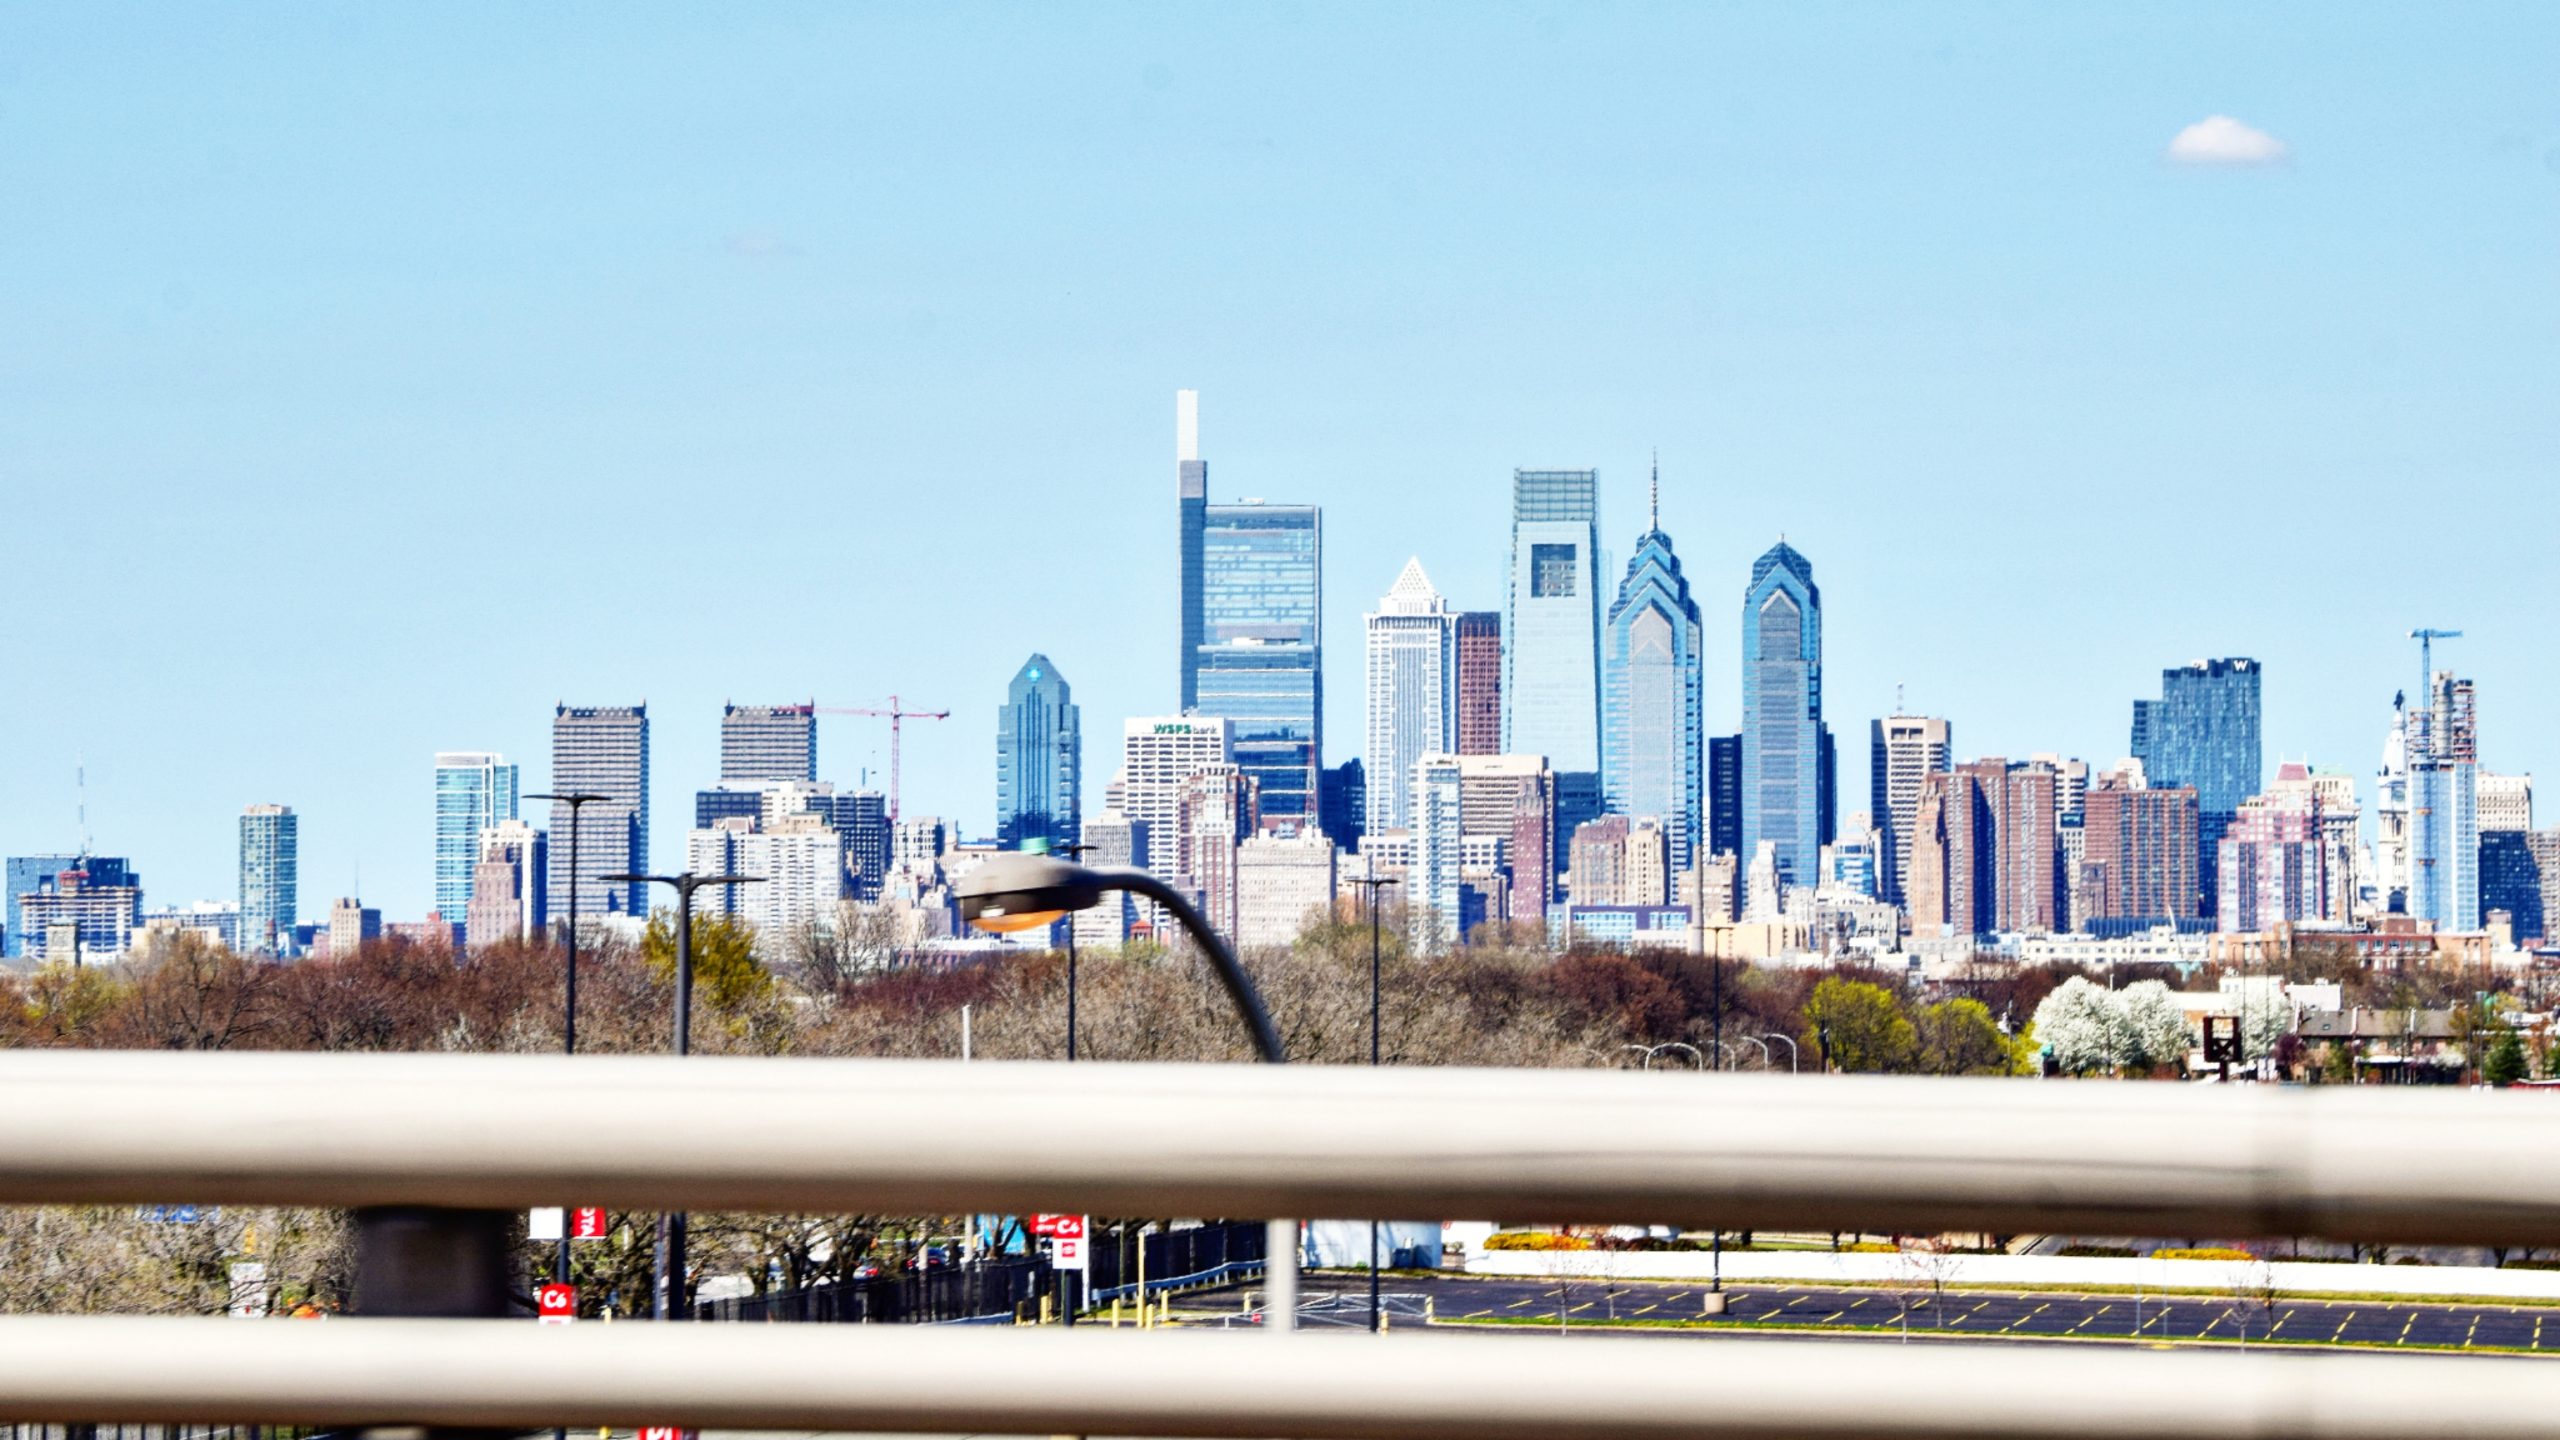 Philadelphia skyline from I-95. Photo by Thomas Koloski